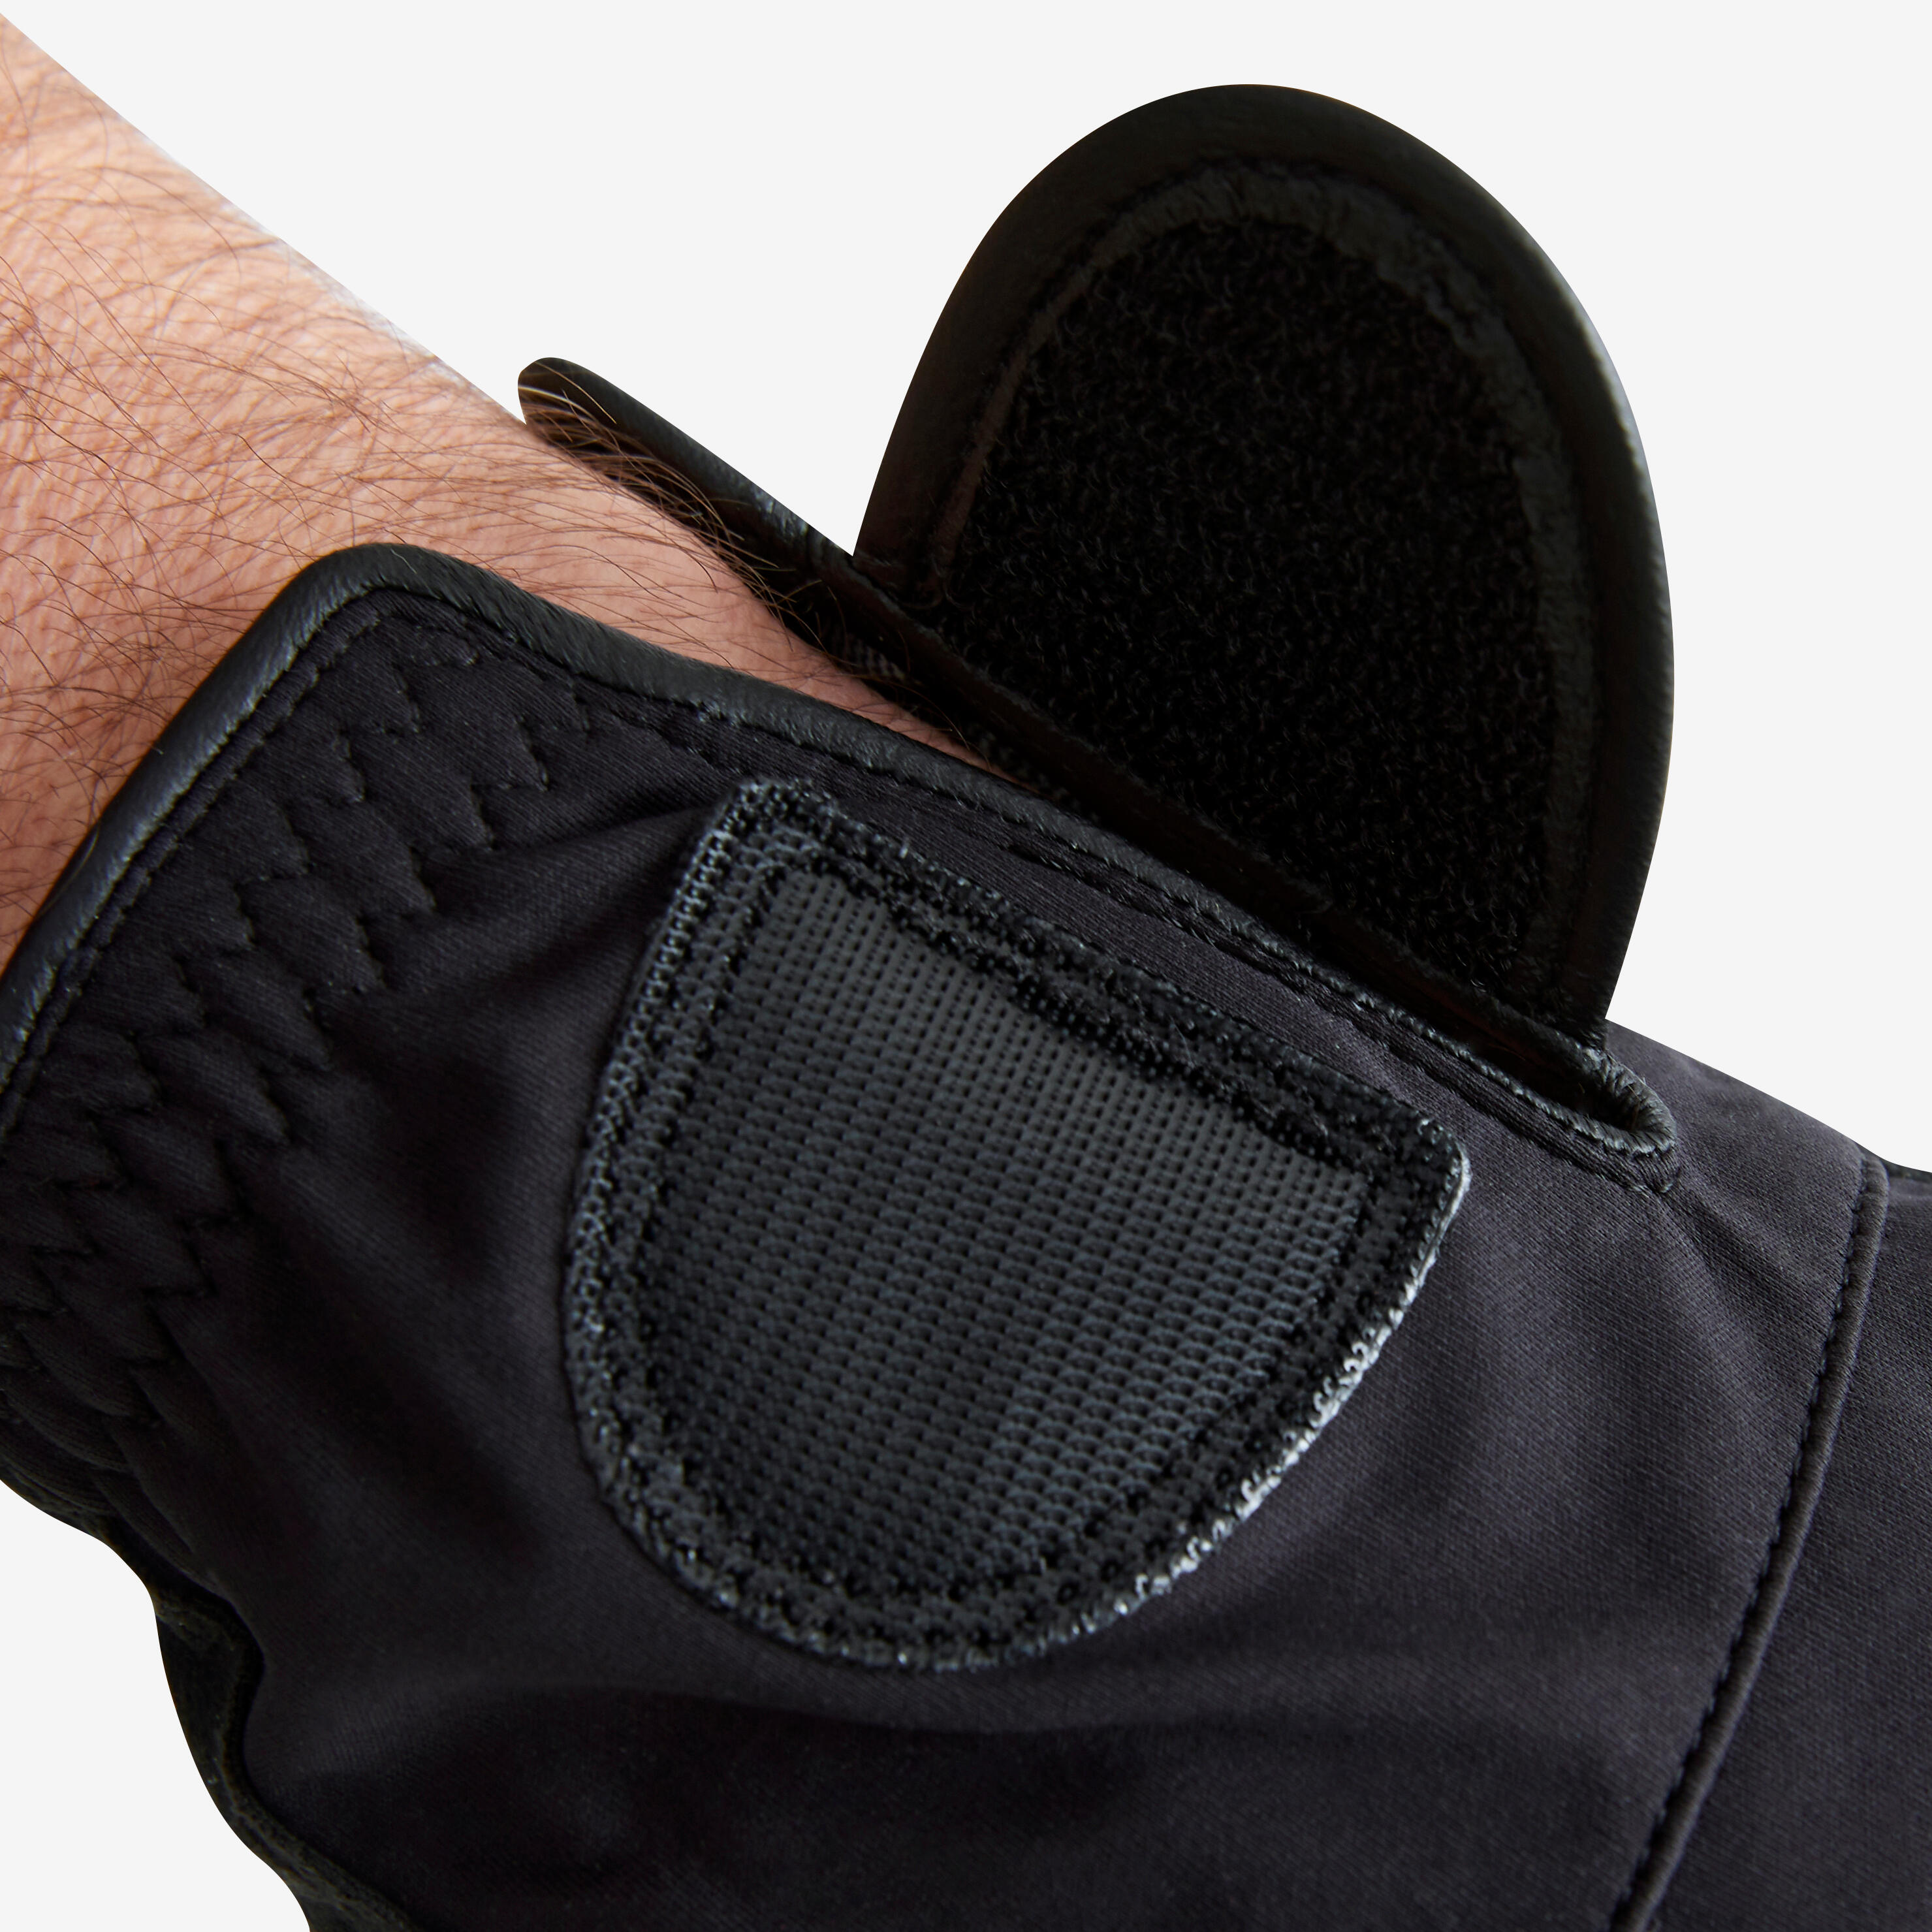 Men's pair of golf rain gloves - RW black 4/5